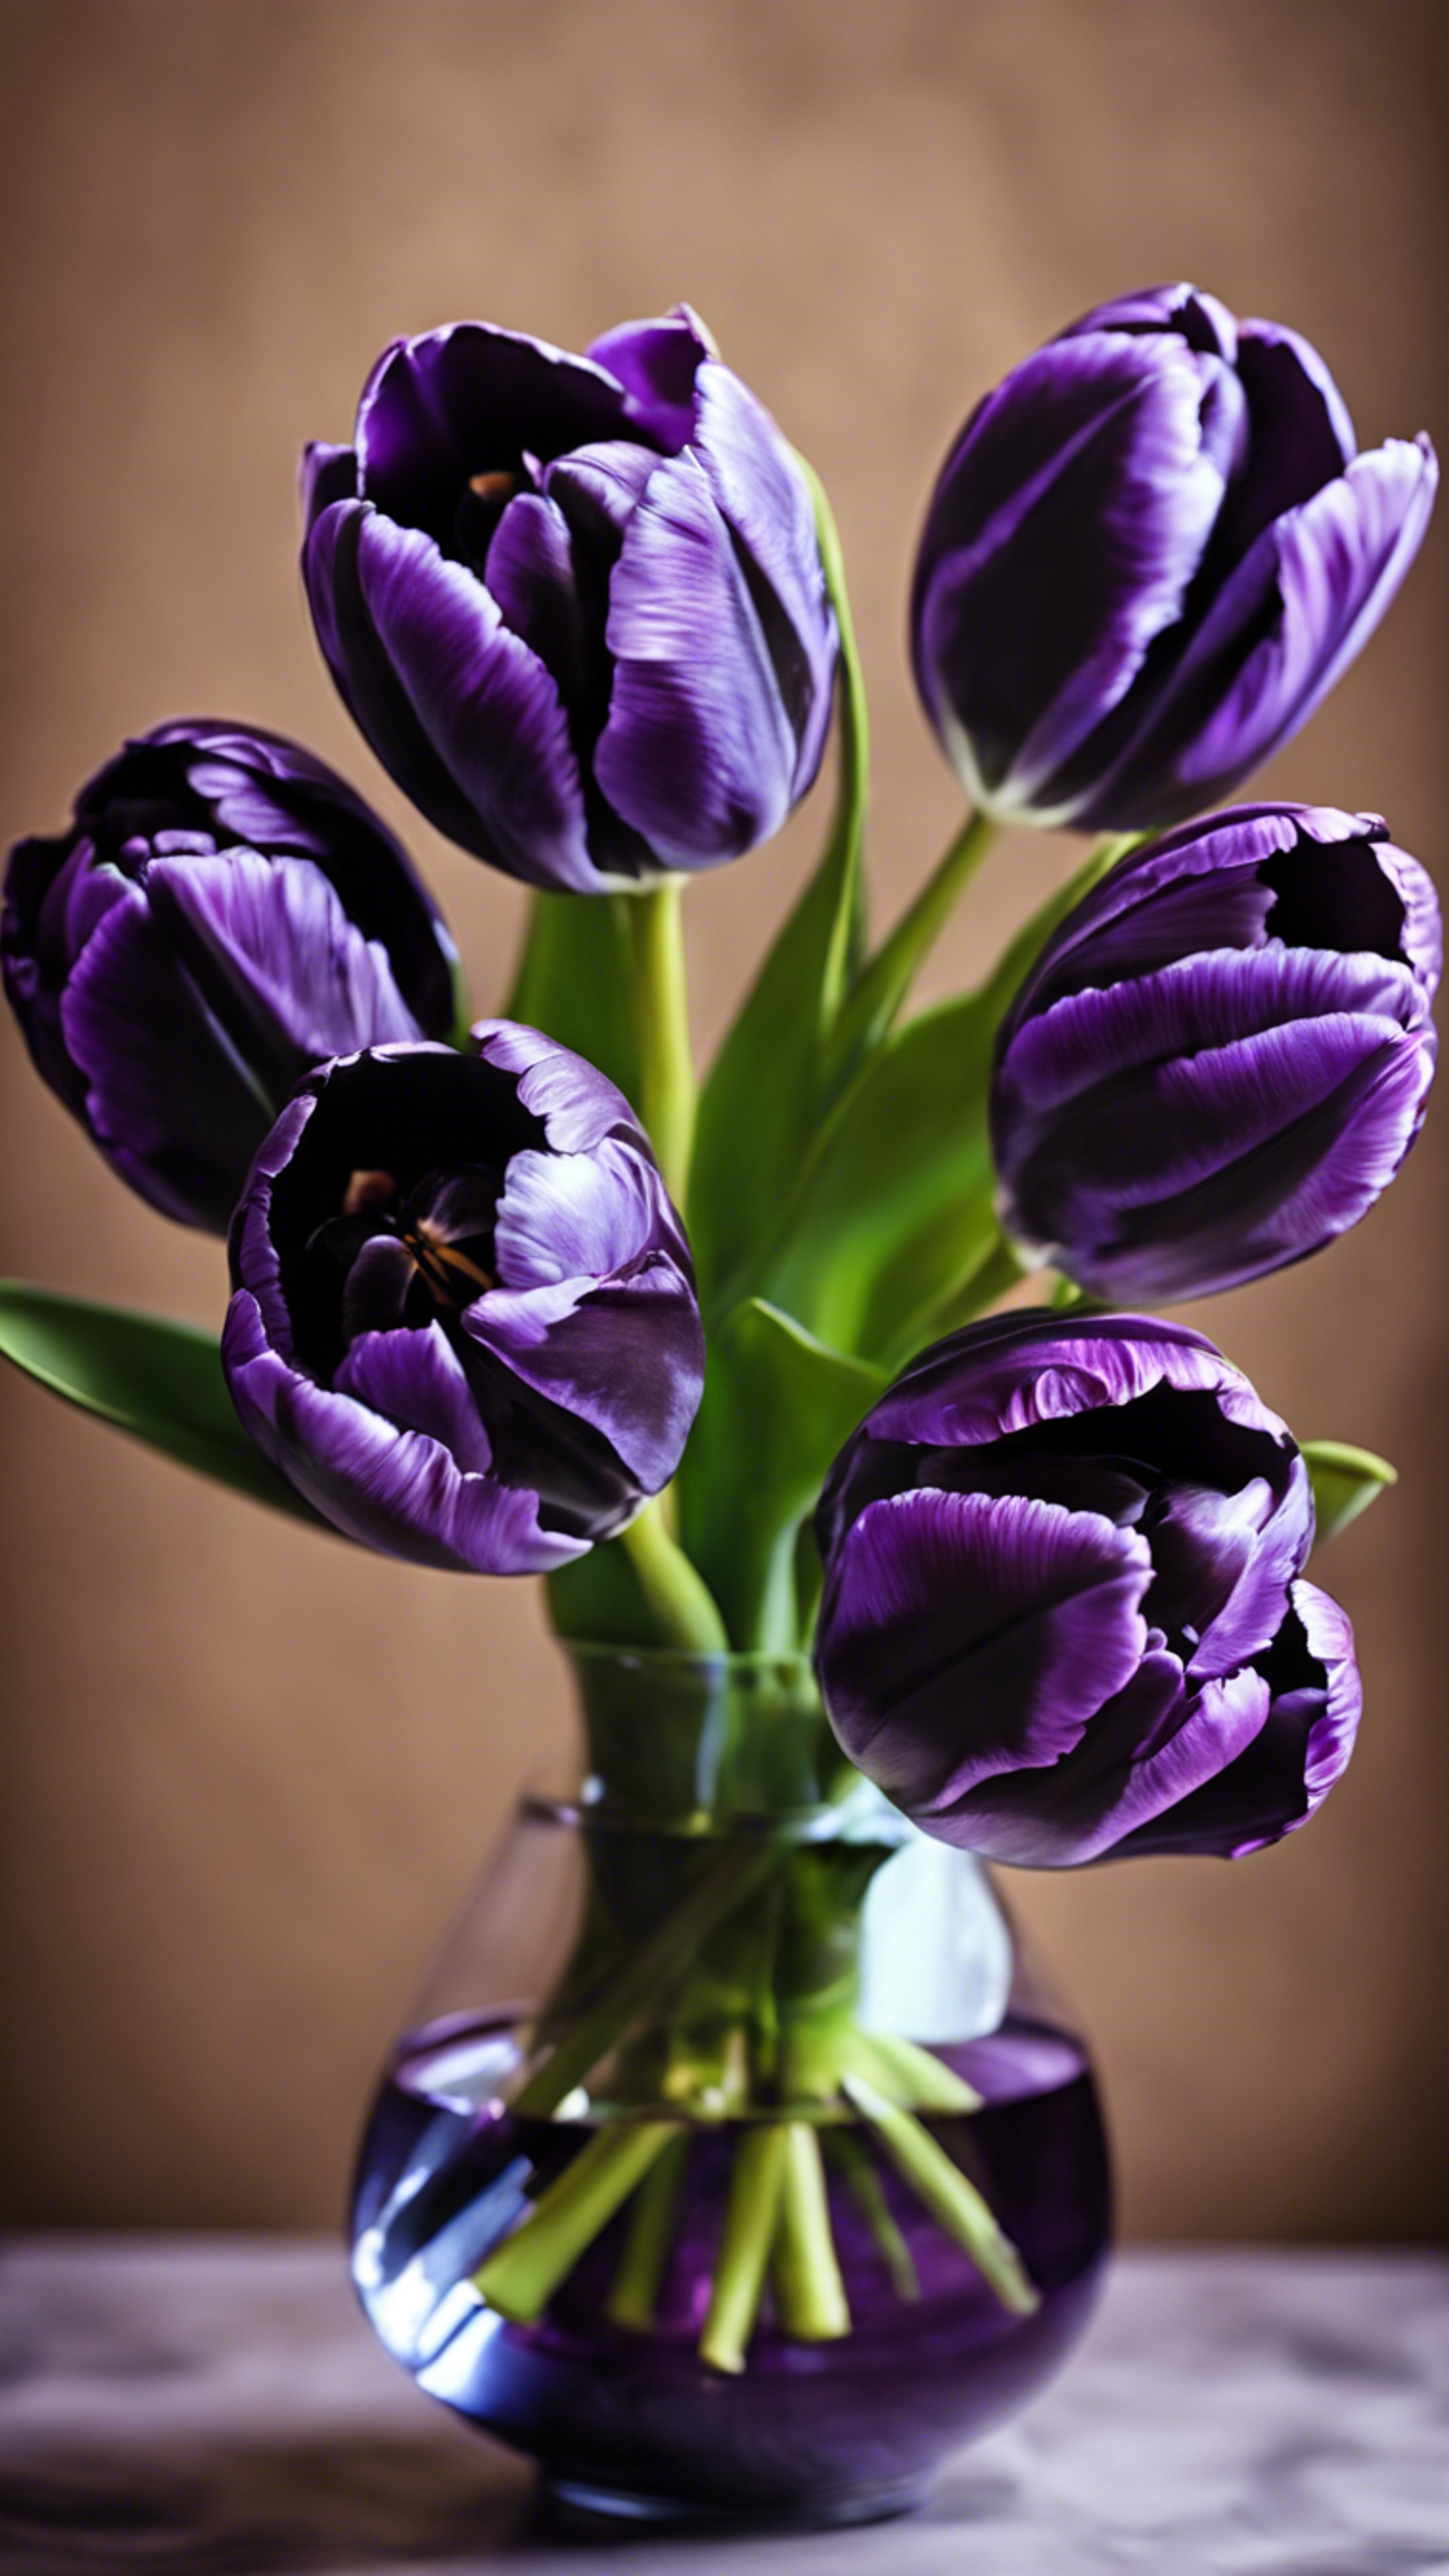 Black tulips with purple edges in full bloom in an elegant vase. Tapeta[bf30bf151b944cb69afa]